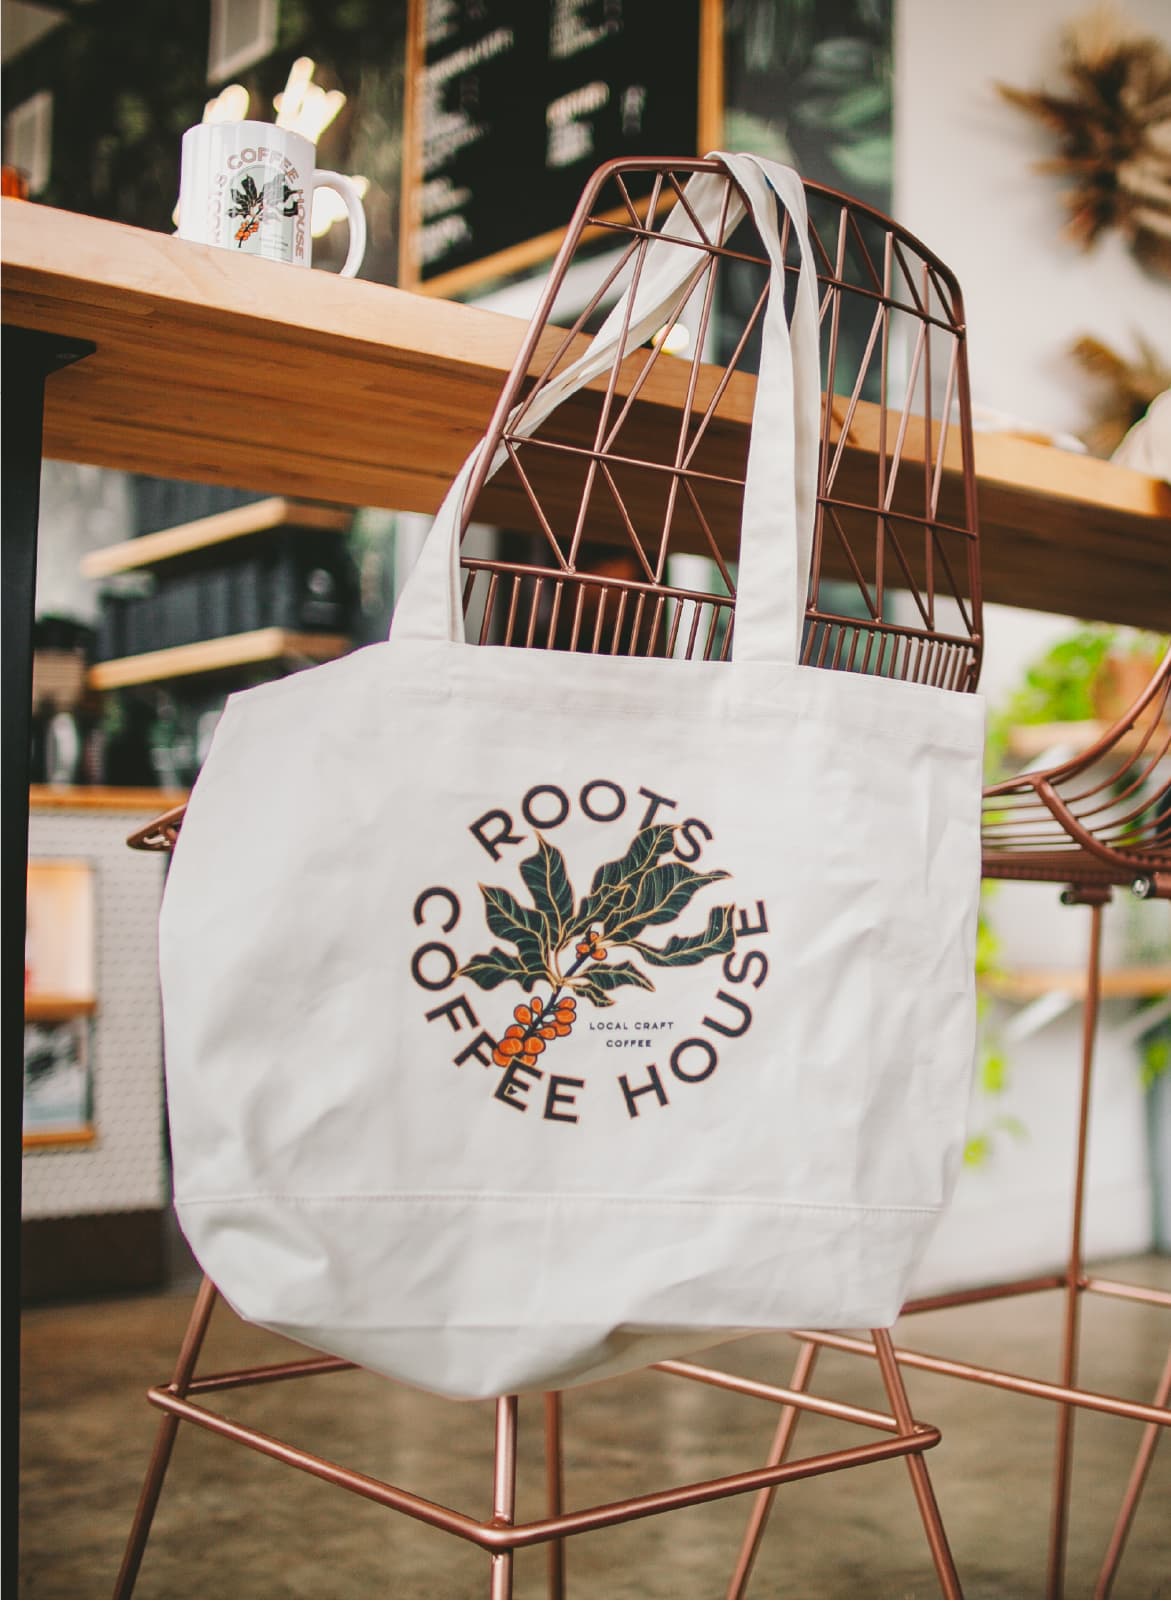 roots coffee house branding design tote bag and coffee mug on location